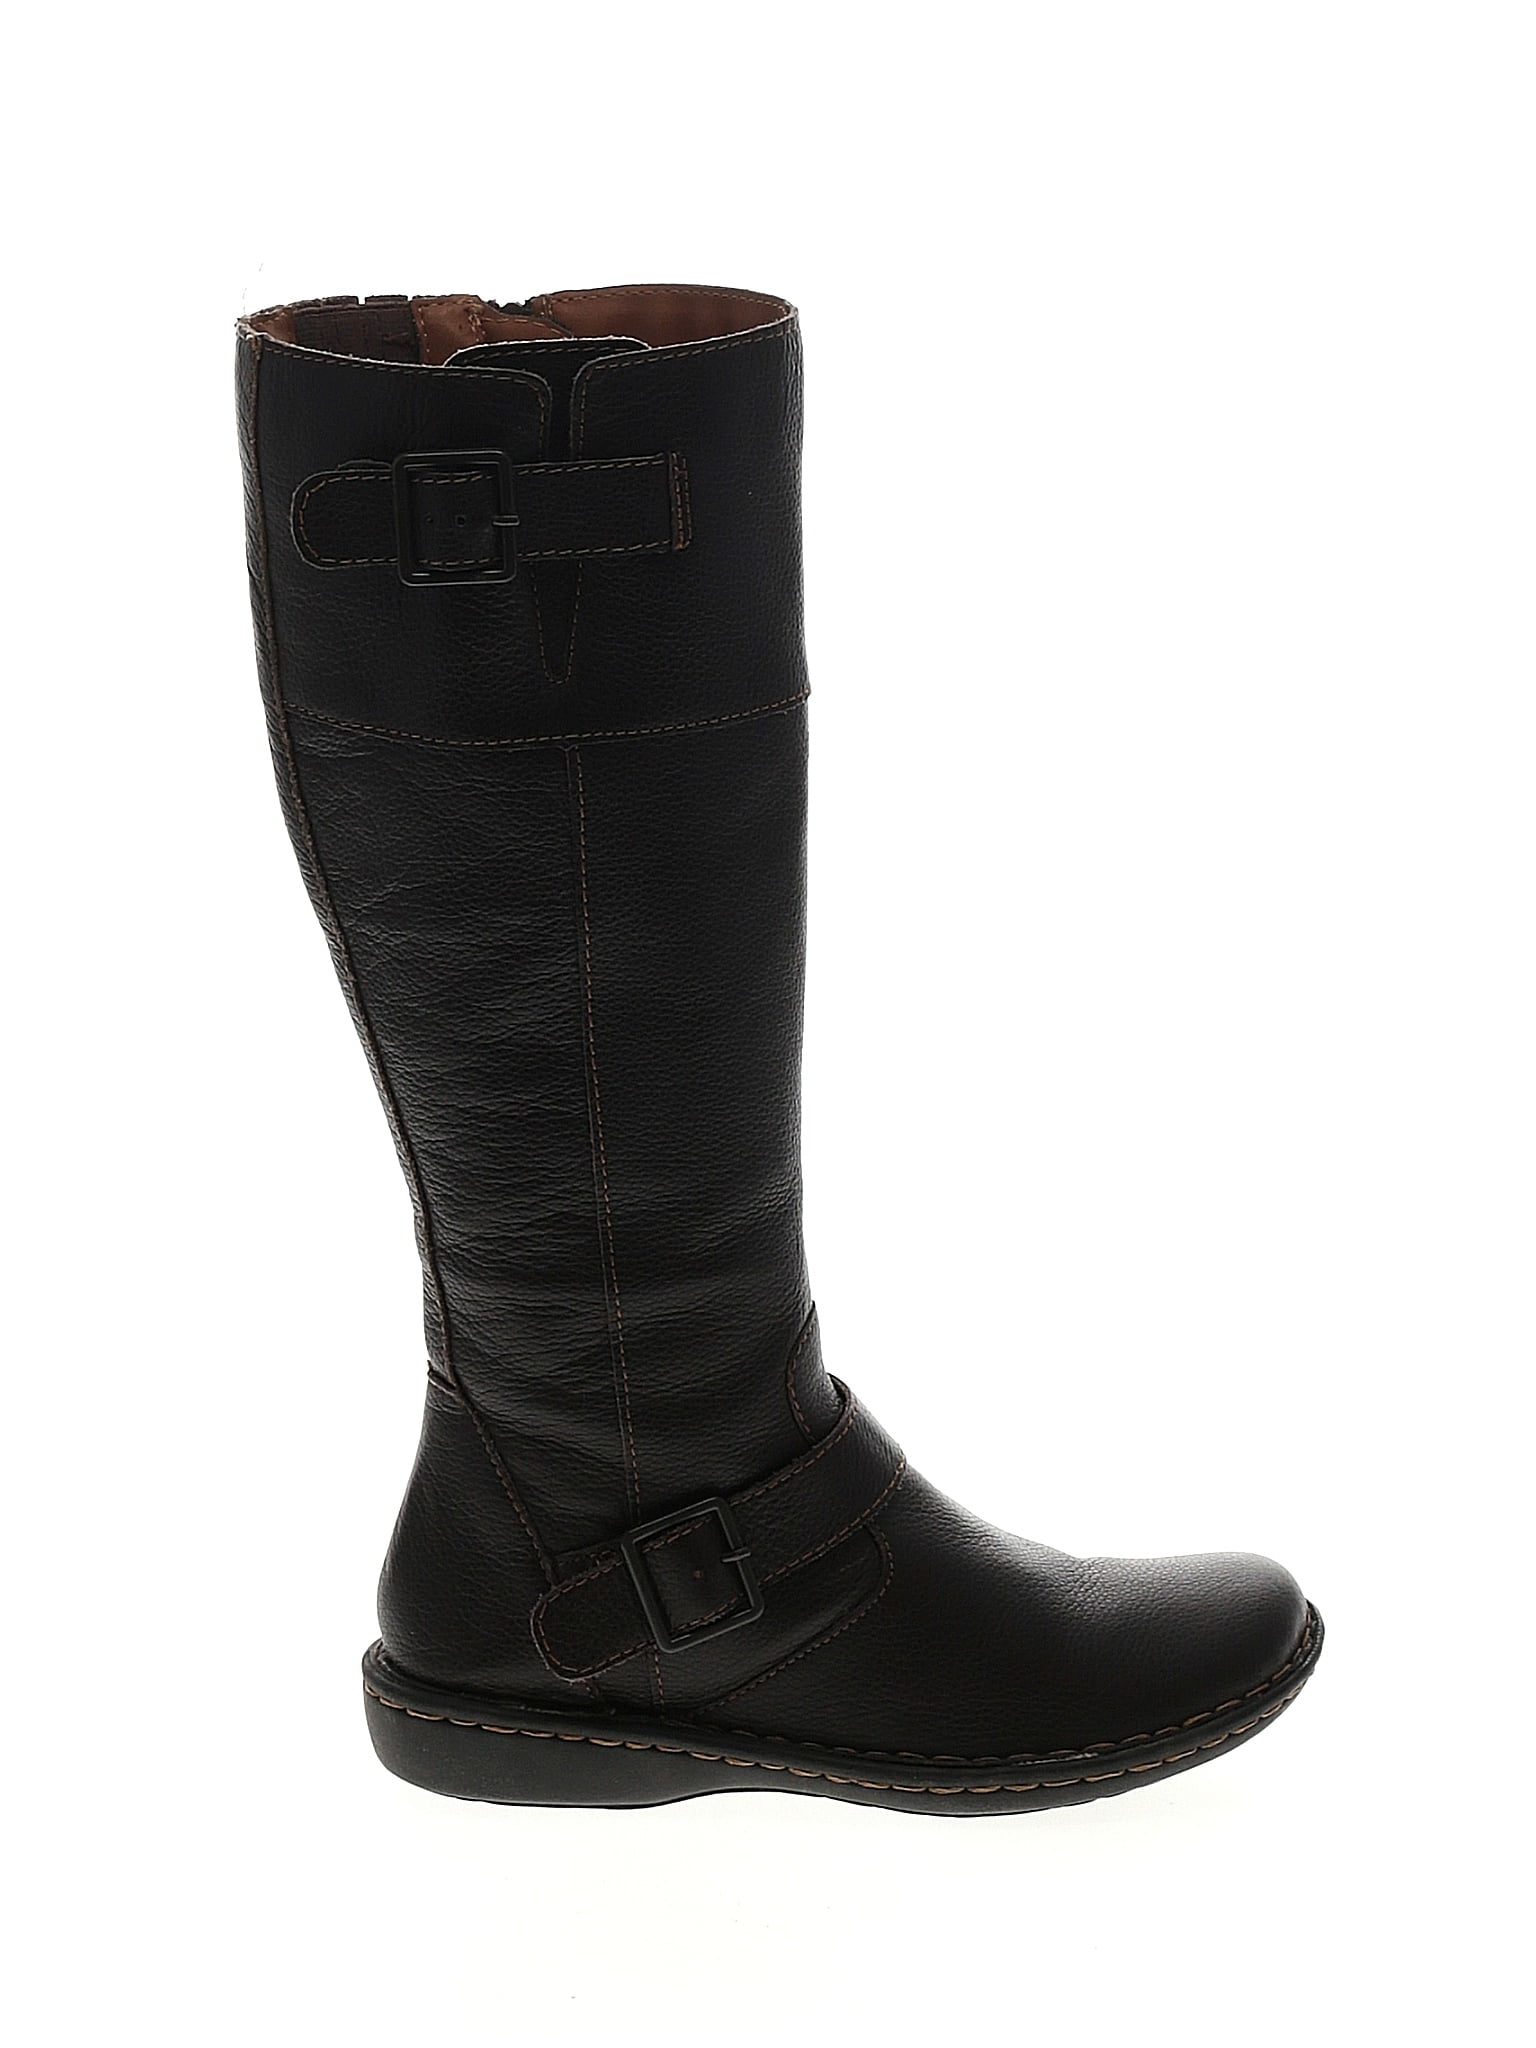 Cabela's 100% Leather Solid Black Boots Size 7 - 62% off | thredUP